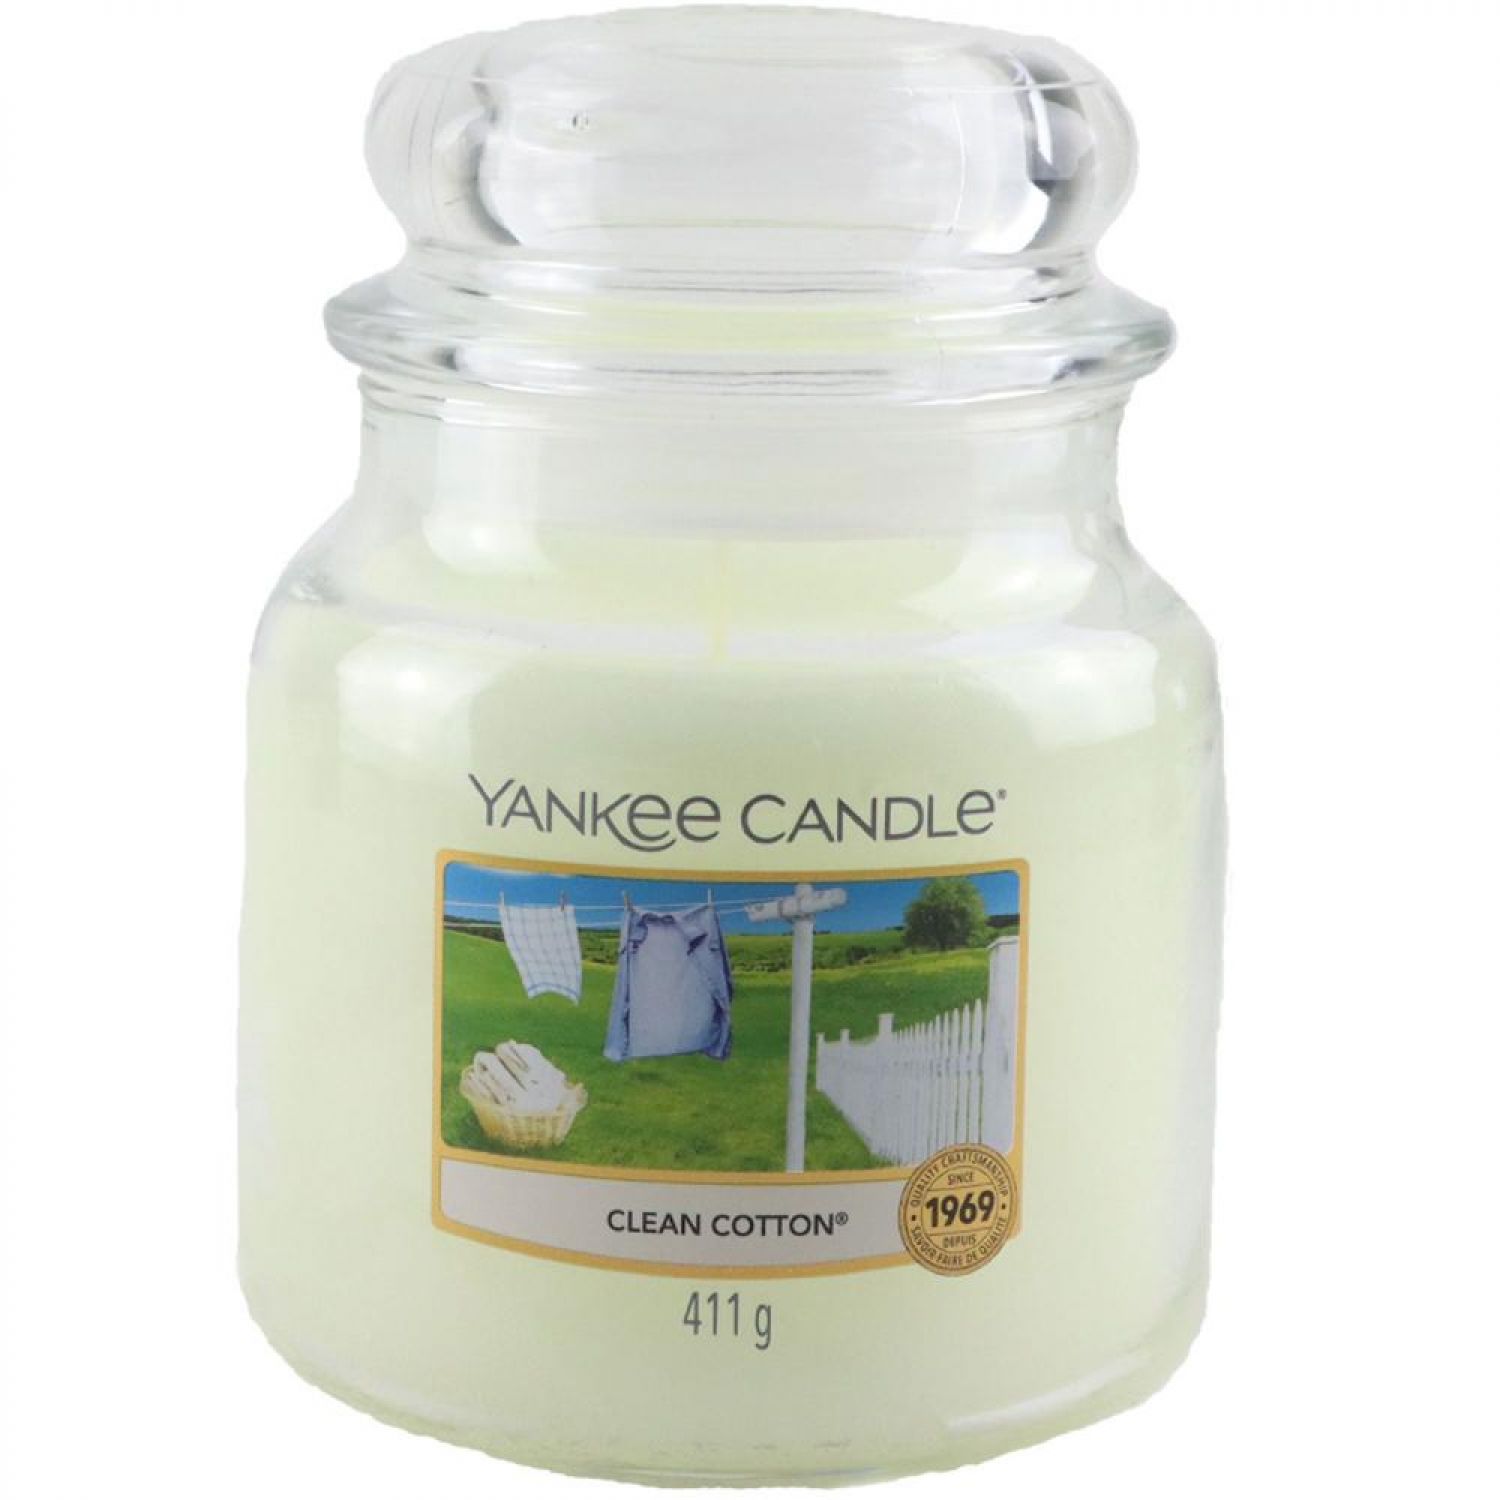 Yankee Candle Duftkerze Clean Cotton im Glas Jar 411 g